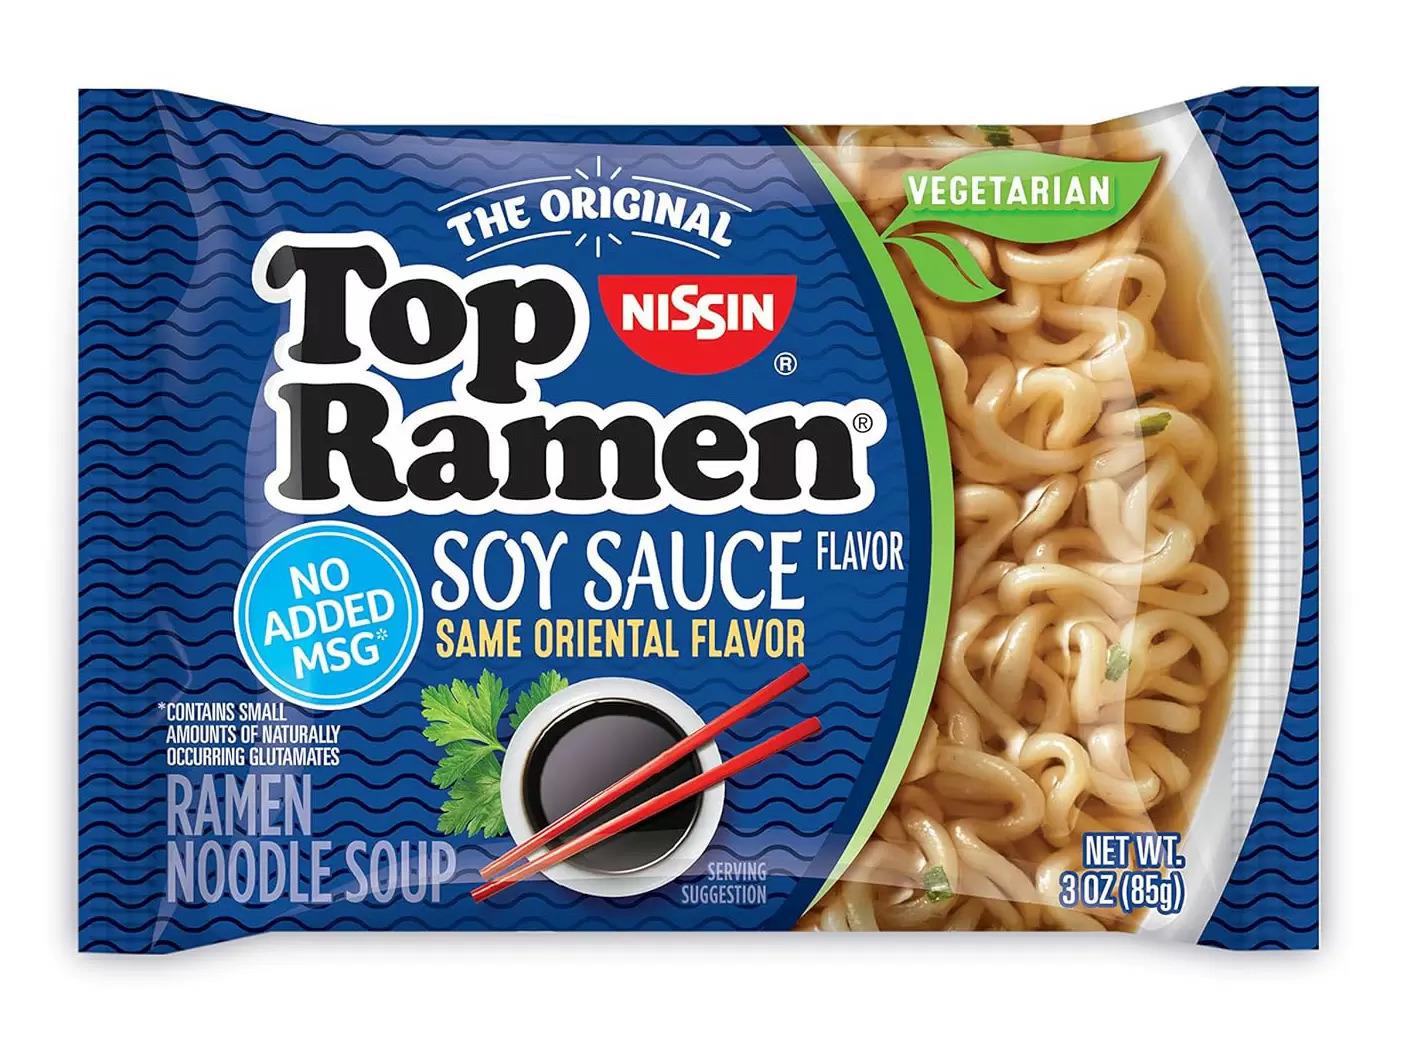 Nissin Top Ramen Noodle Soup 24 Pack for $7.52